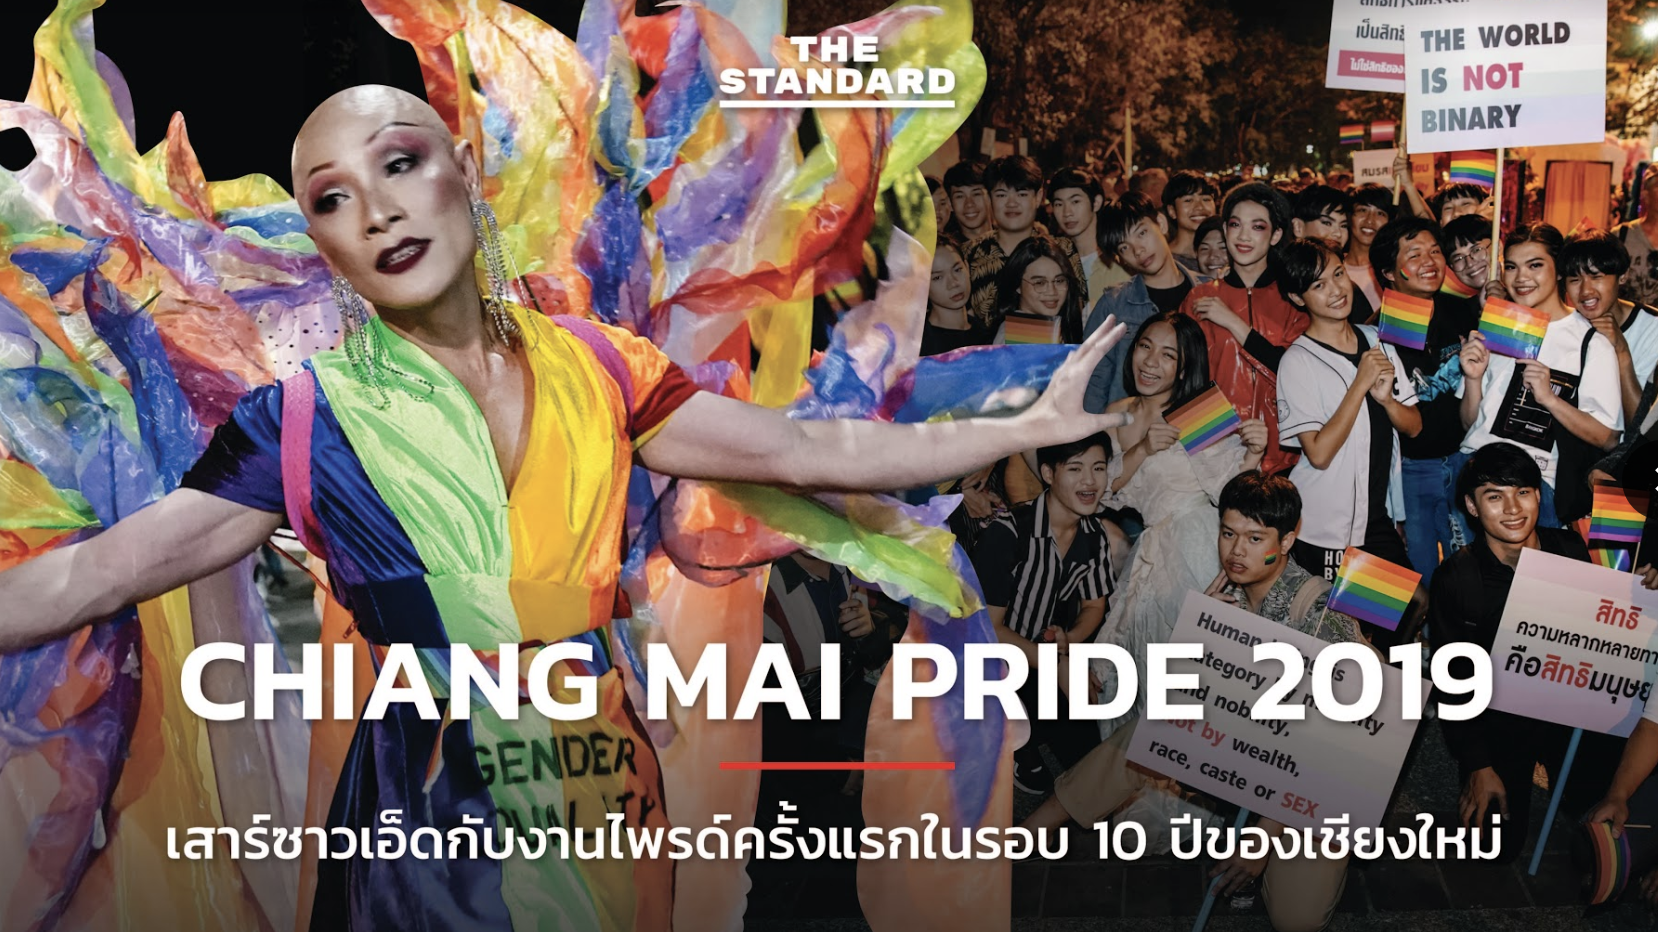 Chiang Mai Pride 2019